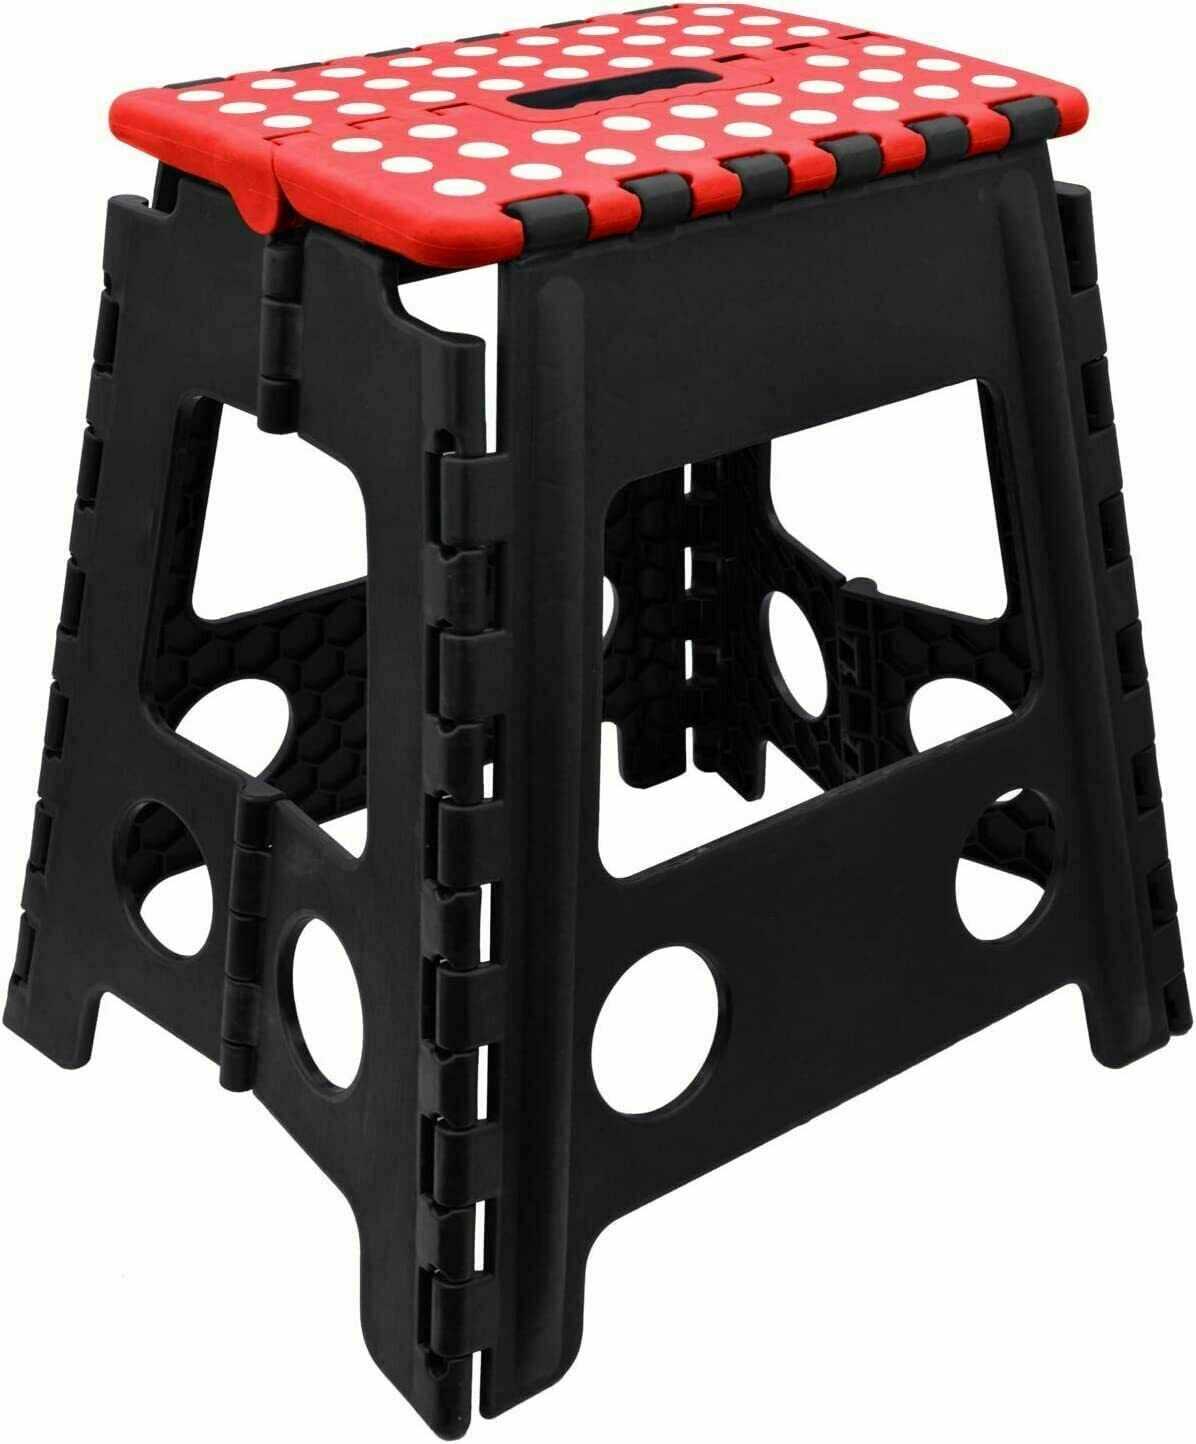 Large Black Red Folding Step Stool Multi Purpose Home Kitchen Foldable Fold Up Step Stool